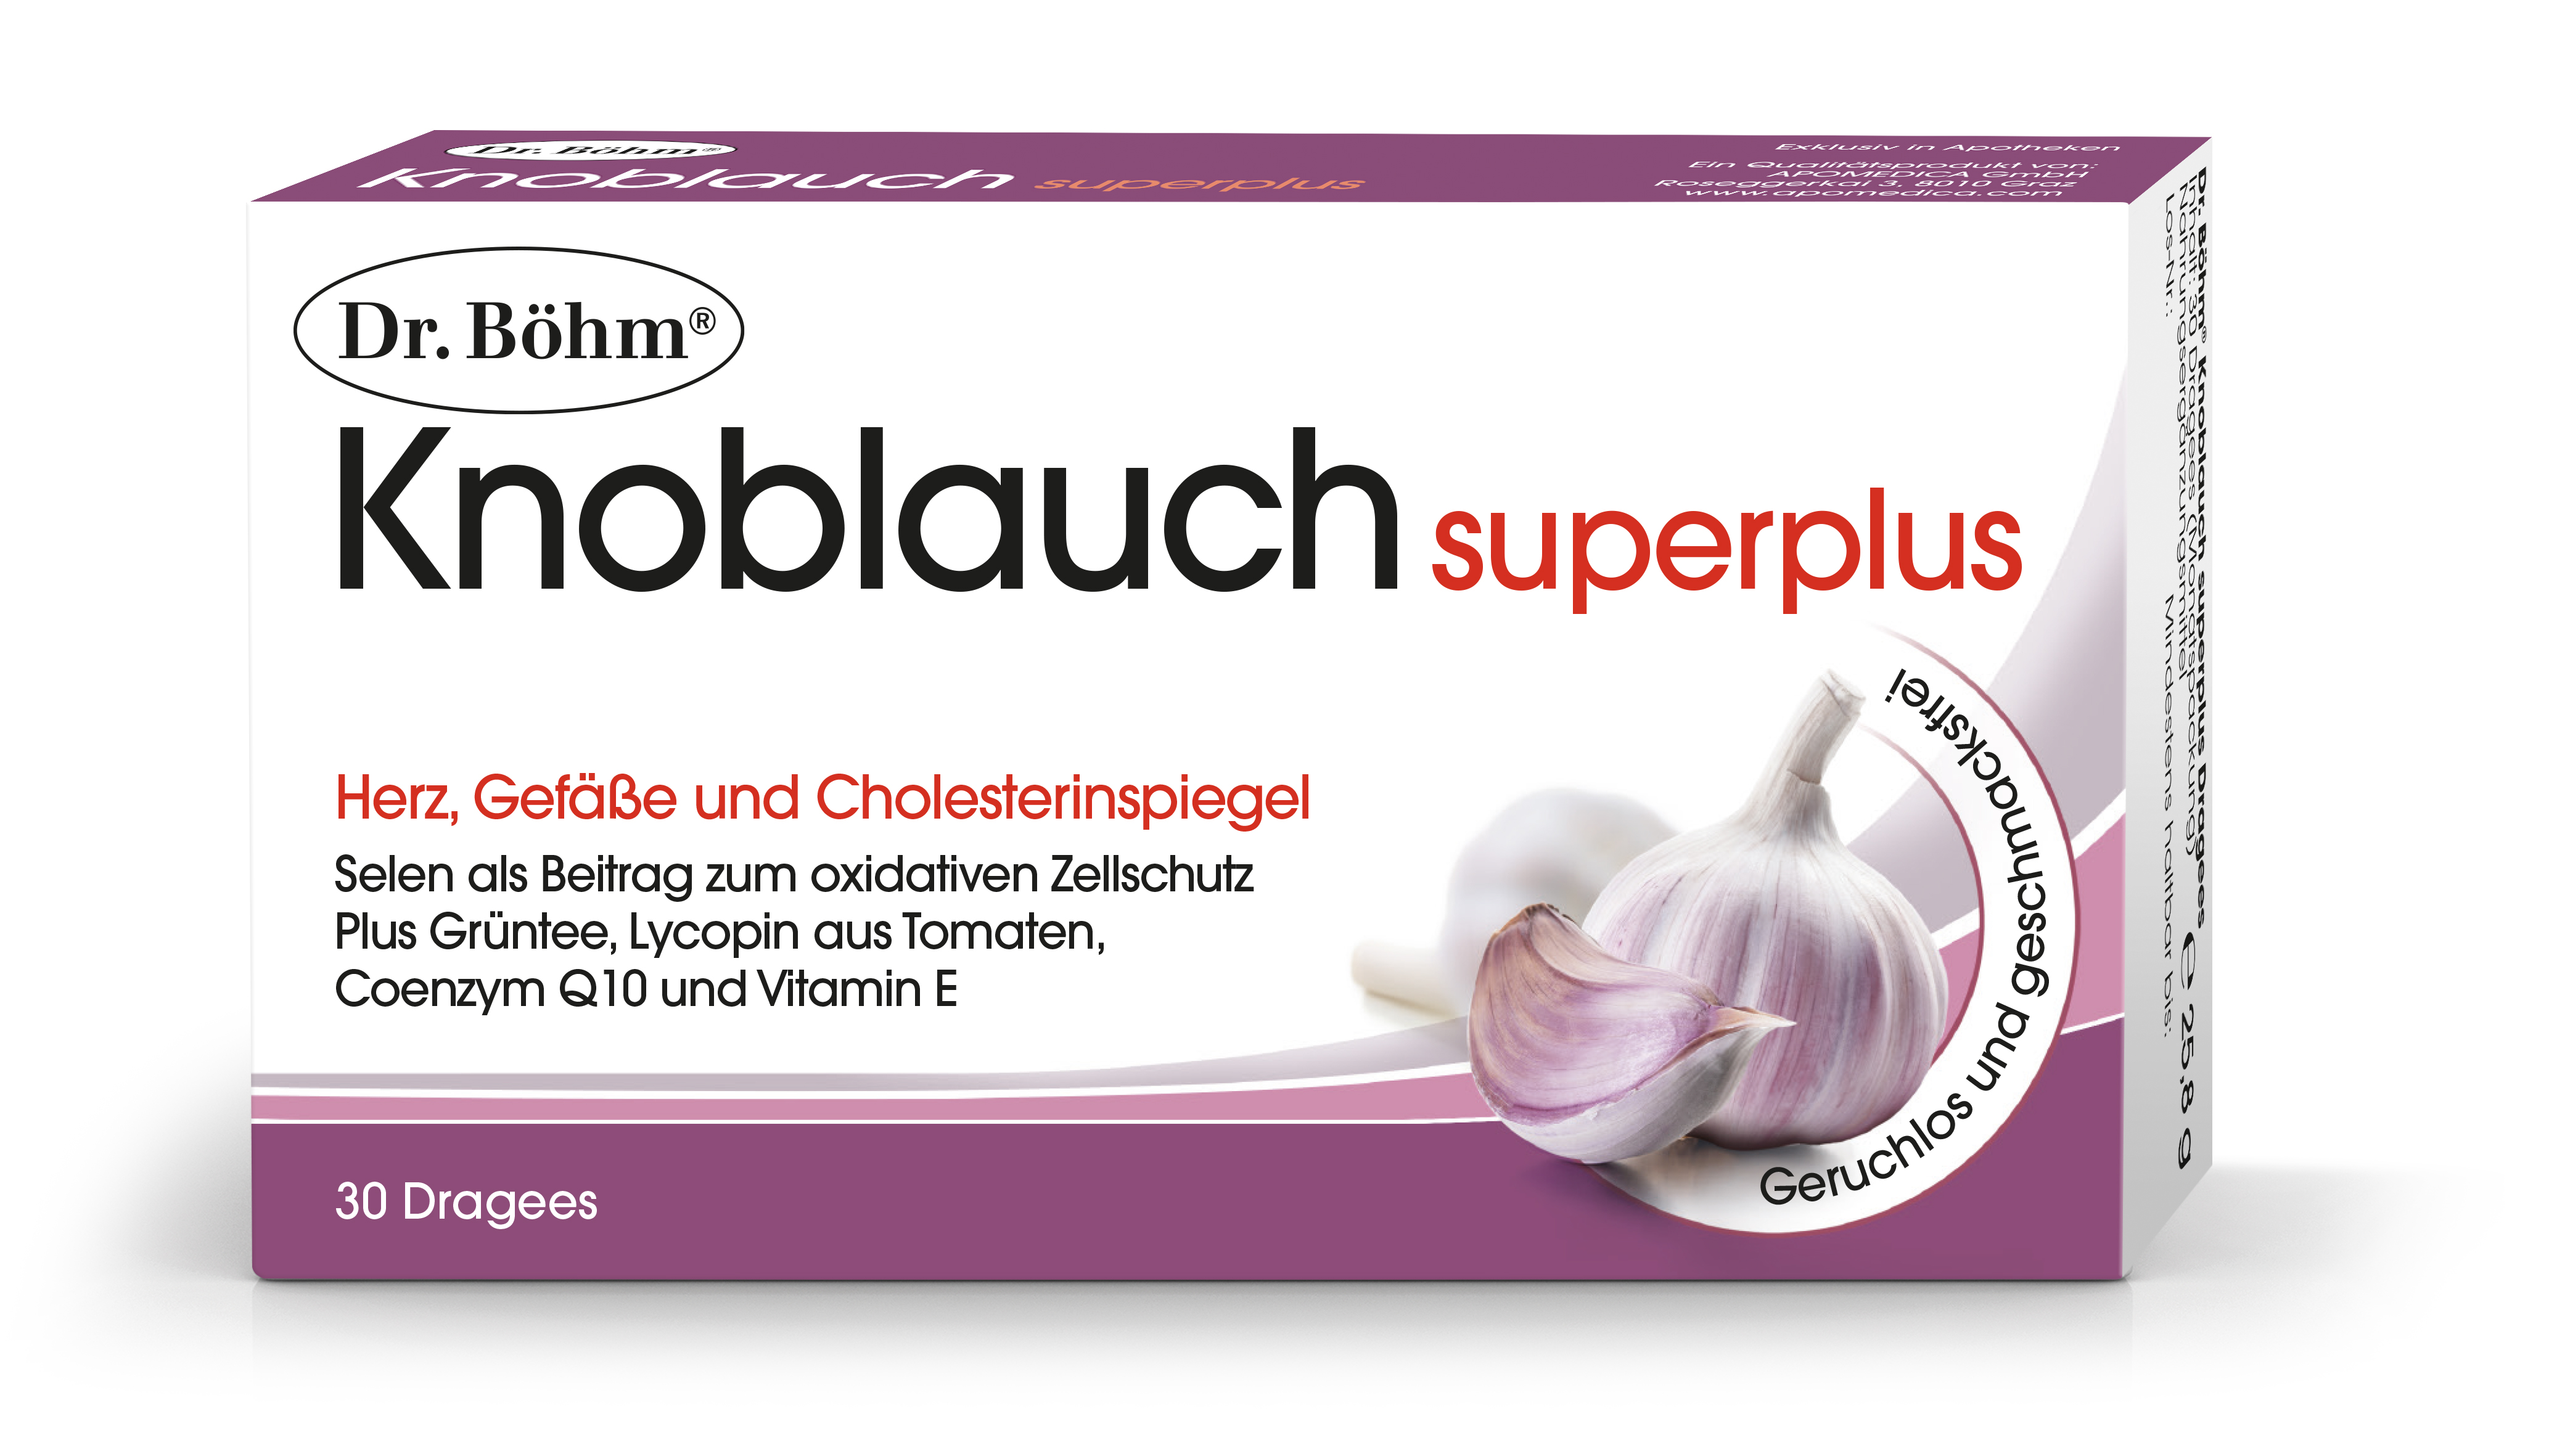 Dr. Böhm Knoblauch superplus